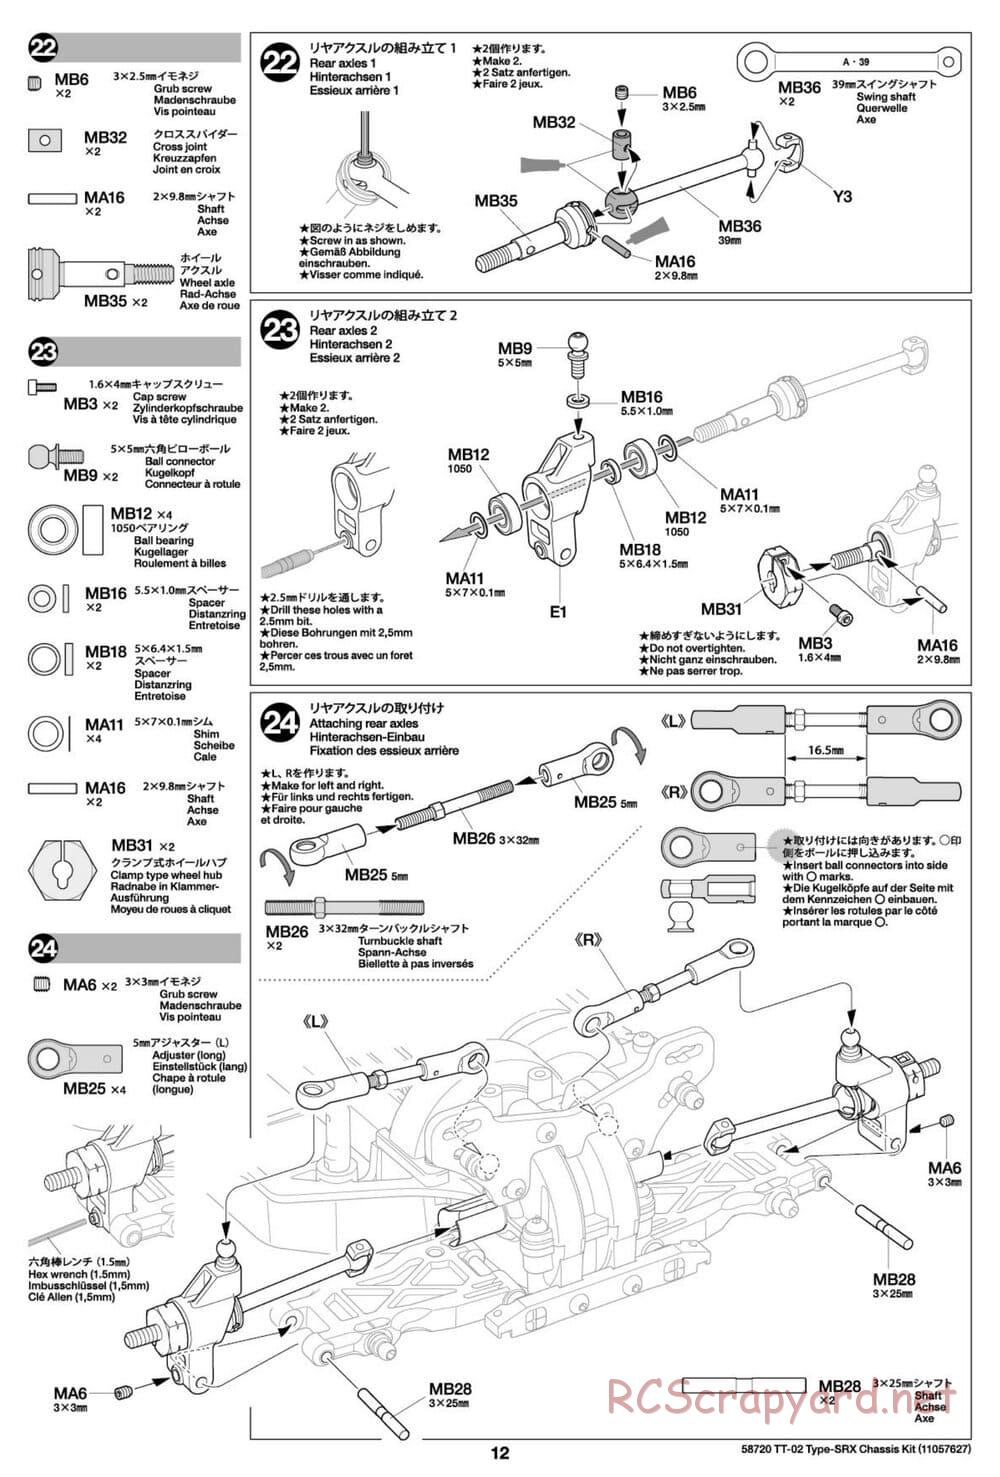 Tamiya - TT-02 Type-SRX Chassis - Manual - Page 12